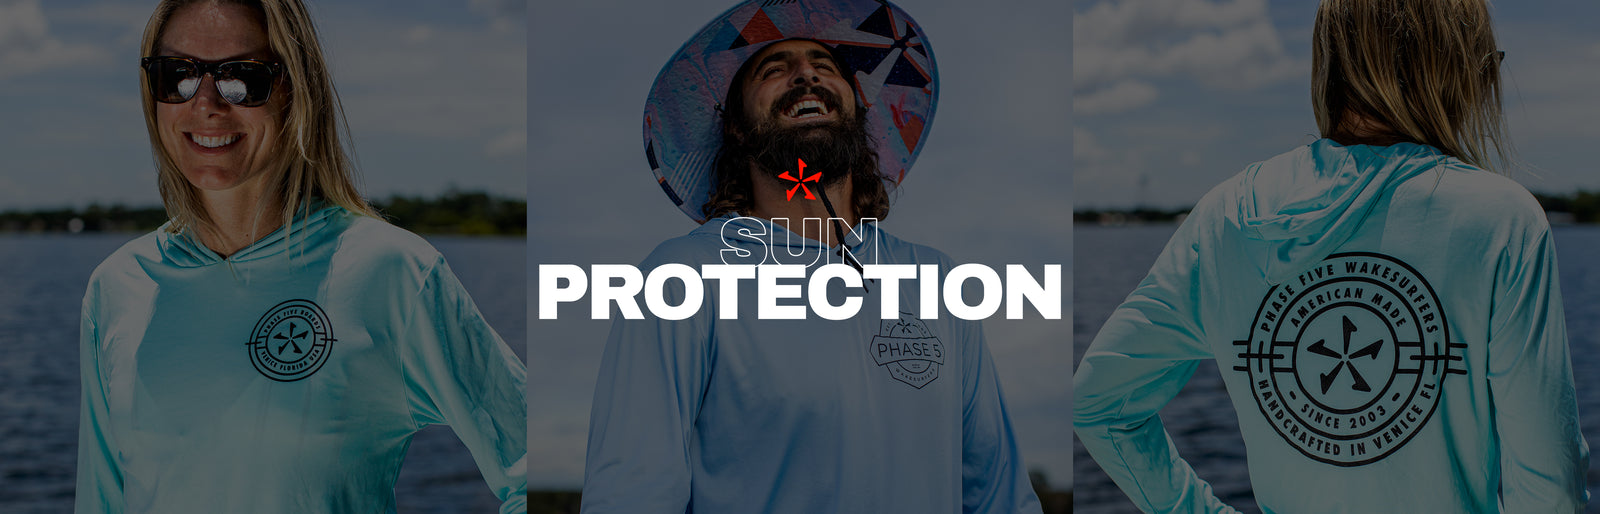 Sun Protection - Phase 5 Wakesurf Boards